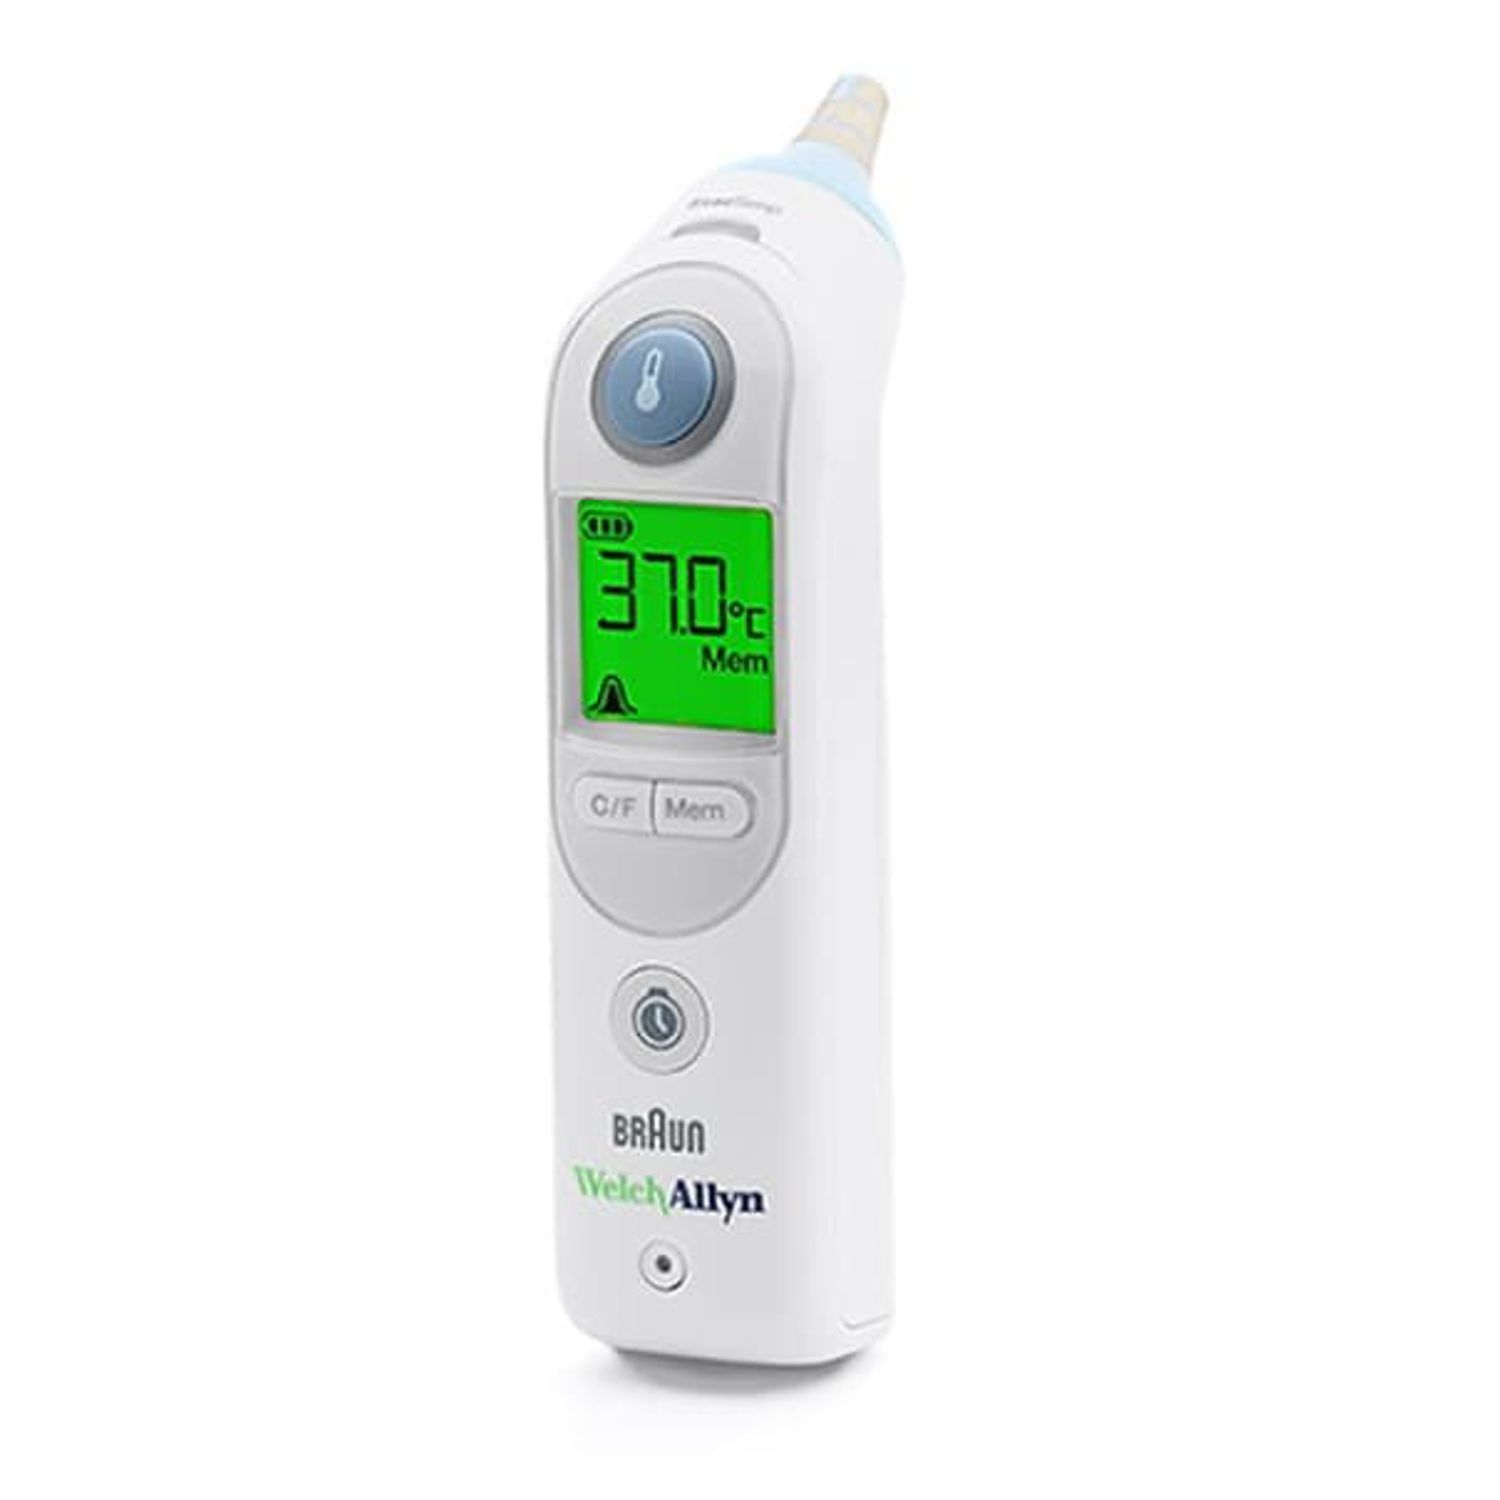 ledematen Reusachtig Schuine streep Braun | Welch & Allyn – Thermoscan Pro 6000 oorthermometer | Stethoscoop  Specialist